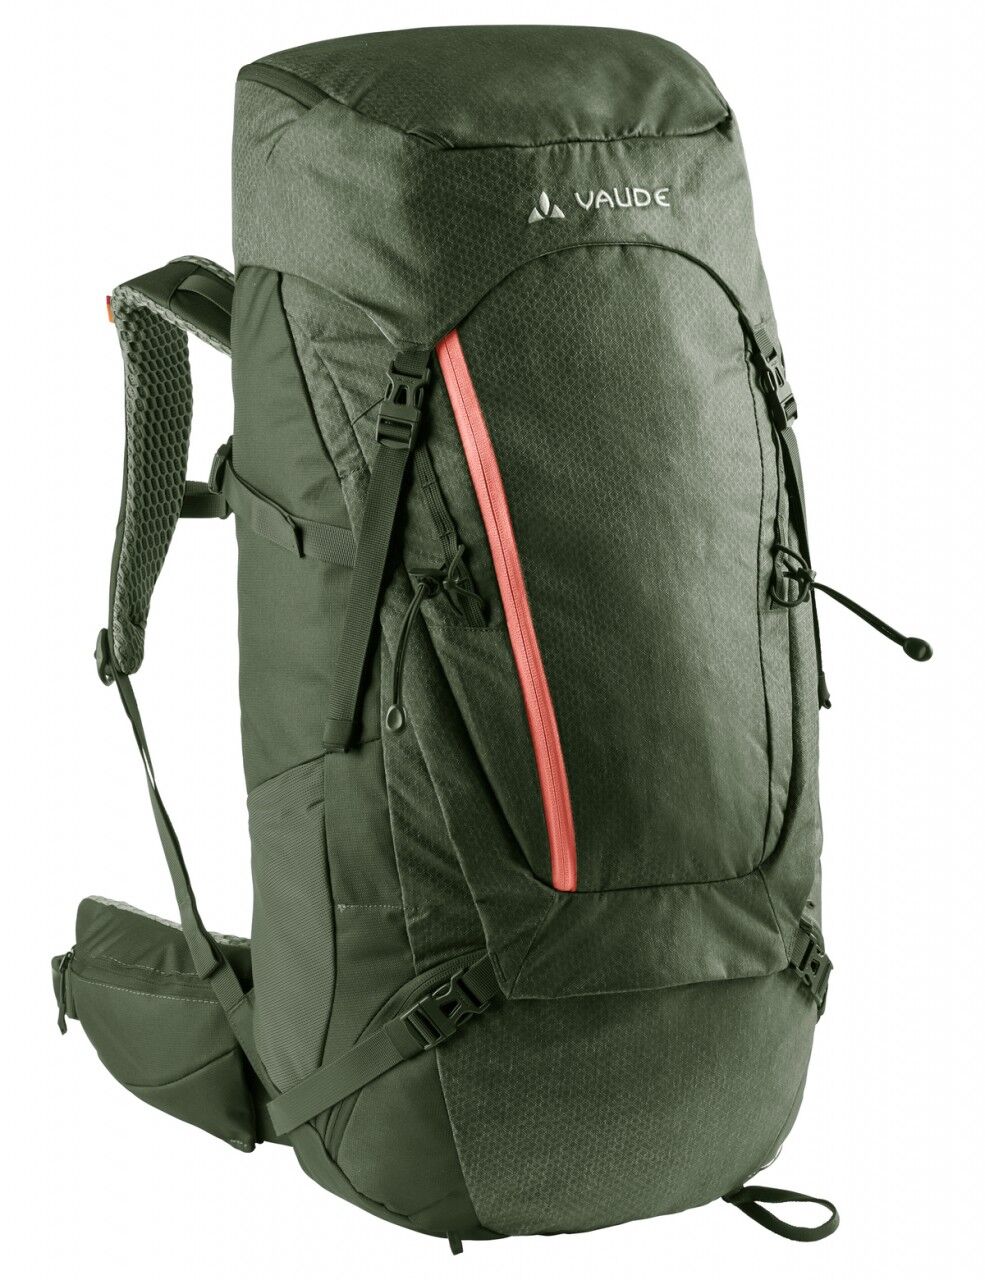 Vaude Asymmetric 48+8 - Hiking backpack - Women's